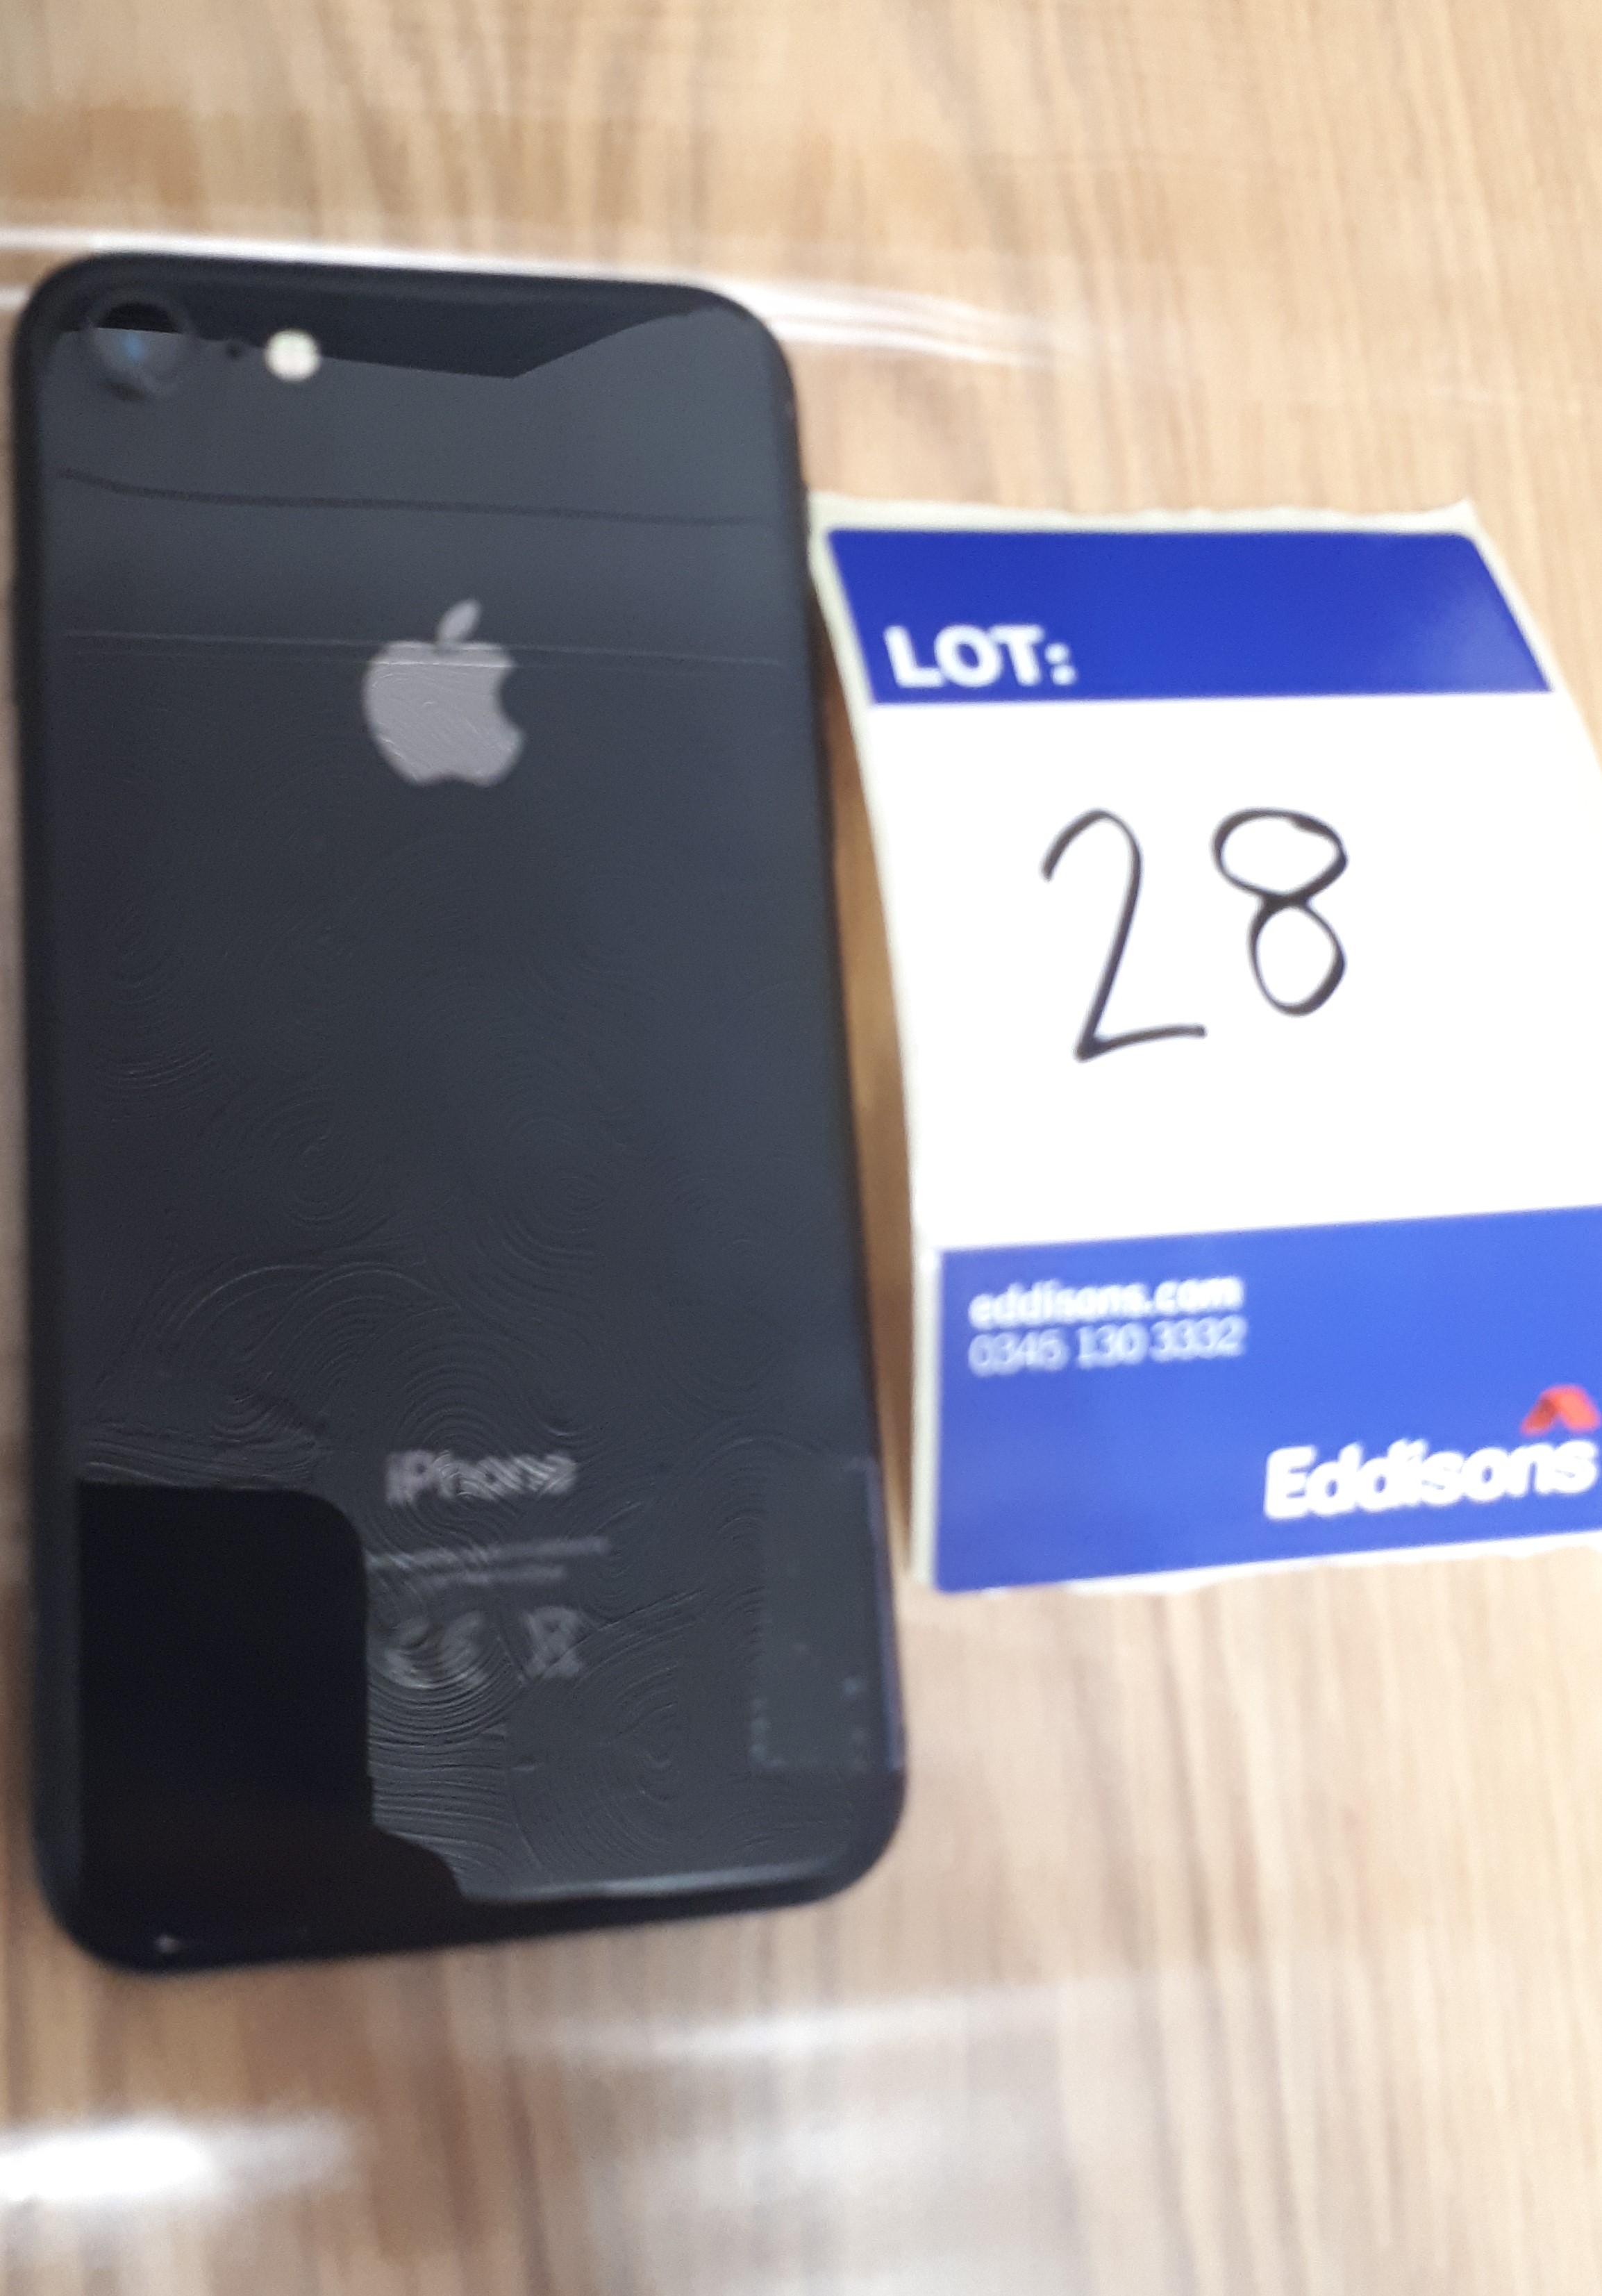 iphone 8 64gb auction